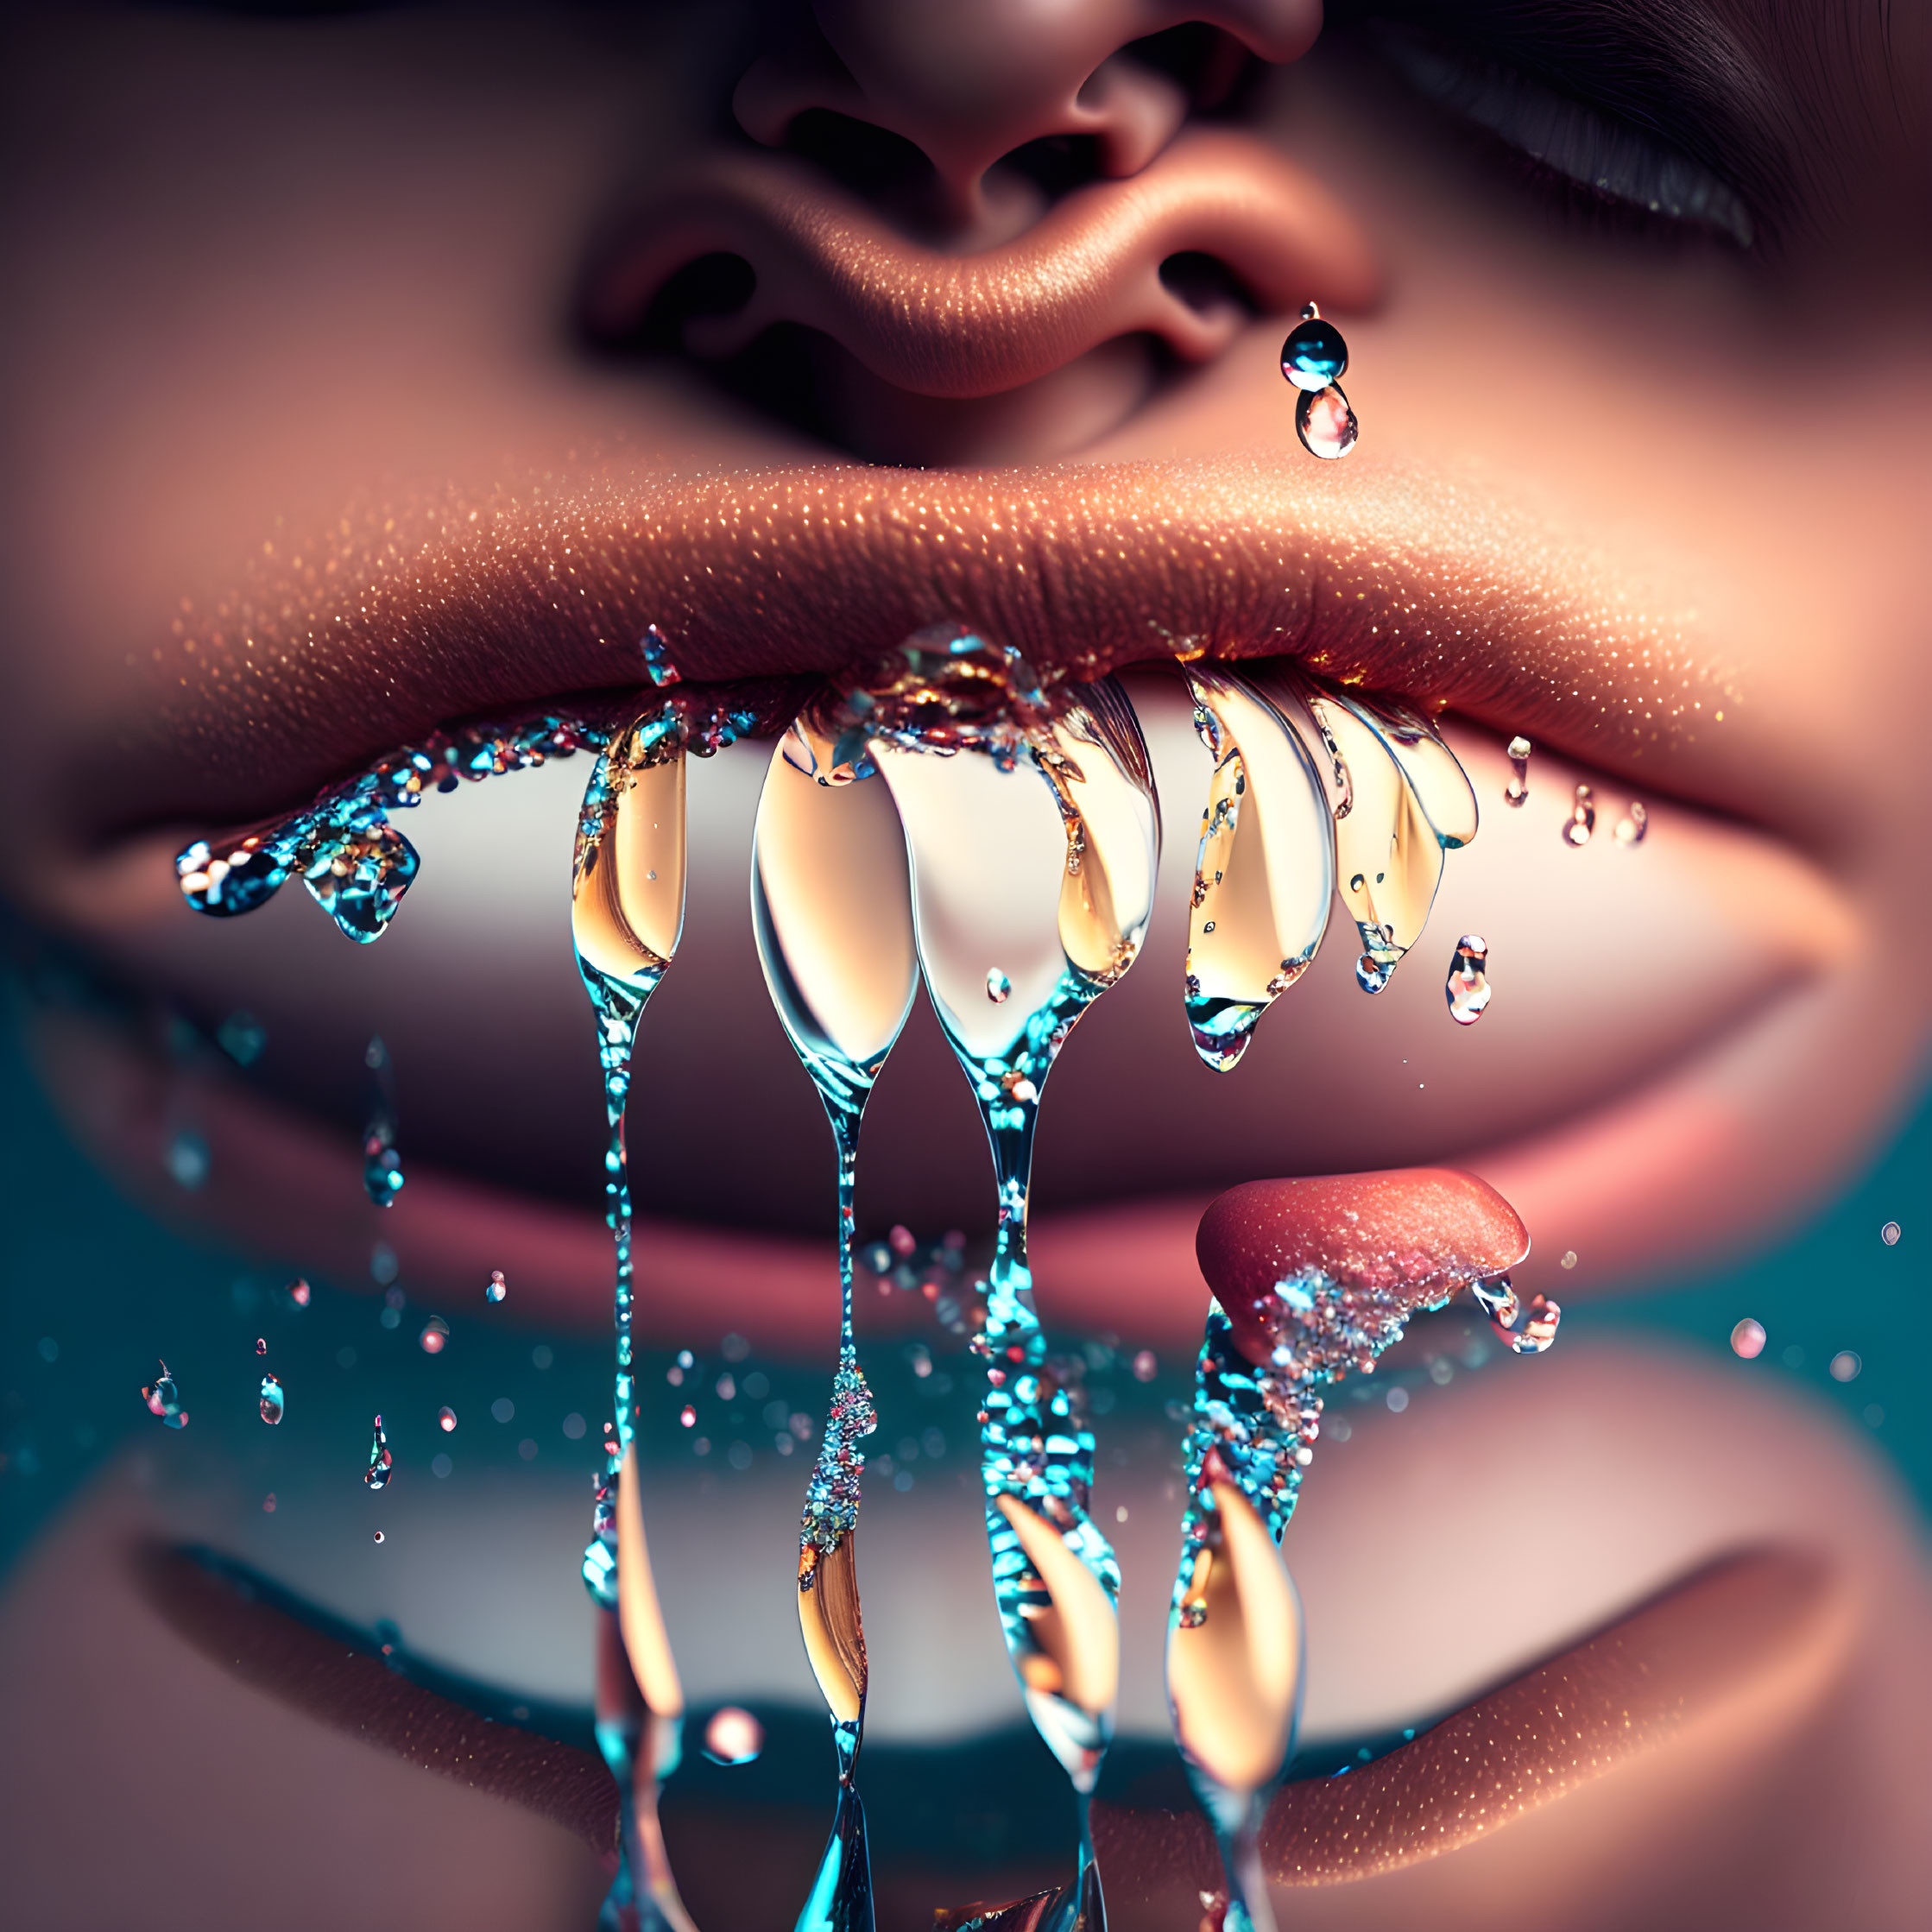 Macro shot of liquid droplets on glossy lips